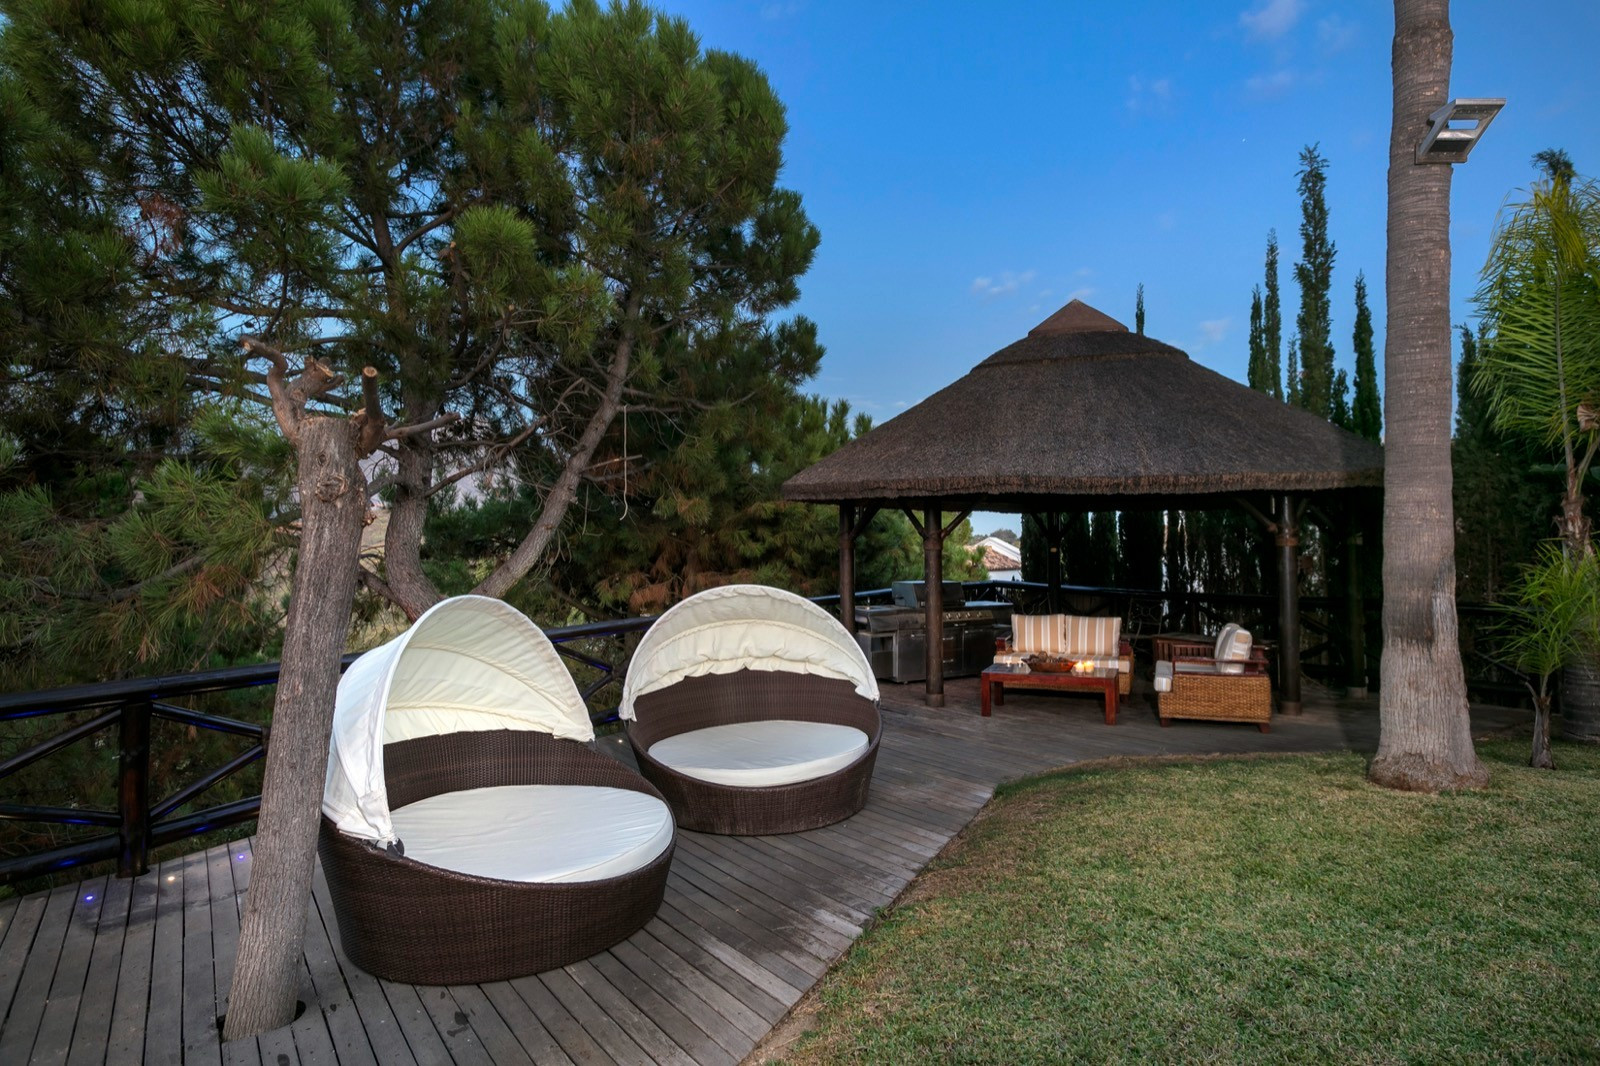 Authentic Mediterranean style villa set in the quiet and residential area of La Quinta